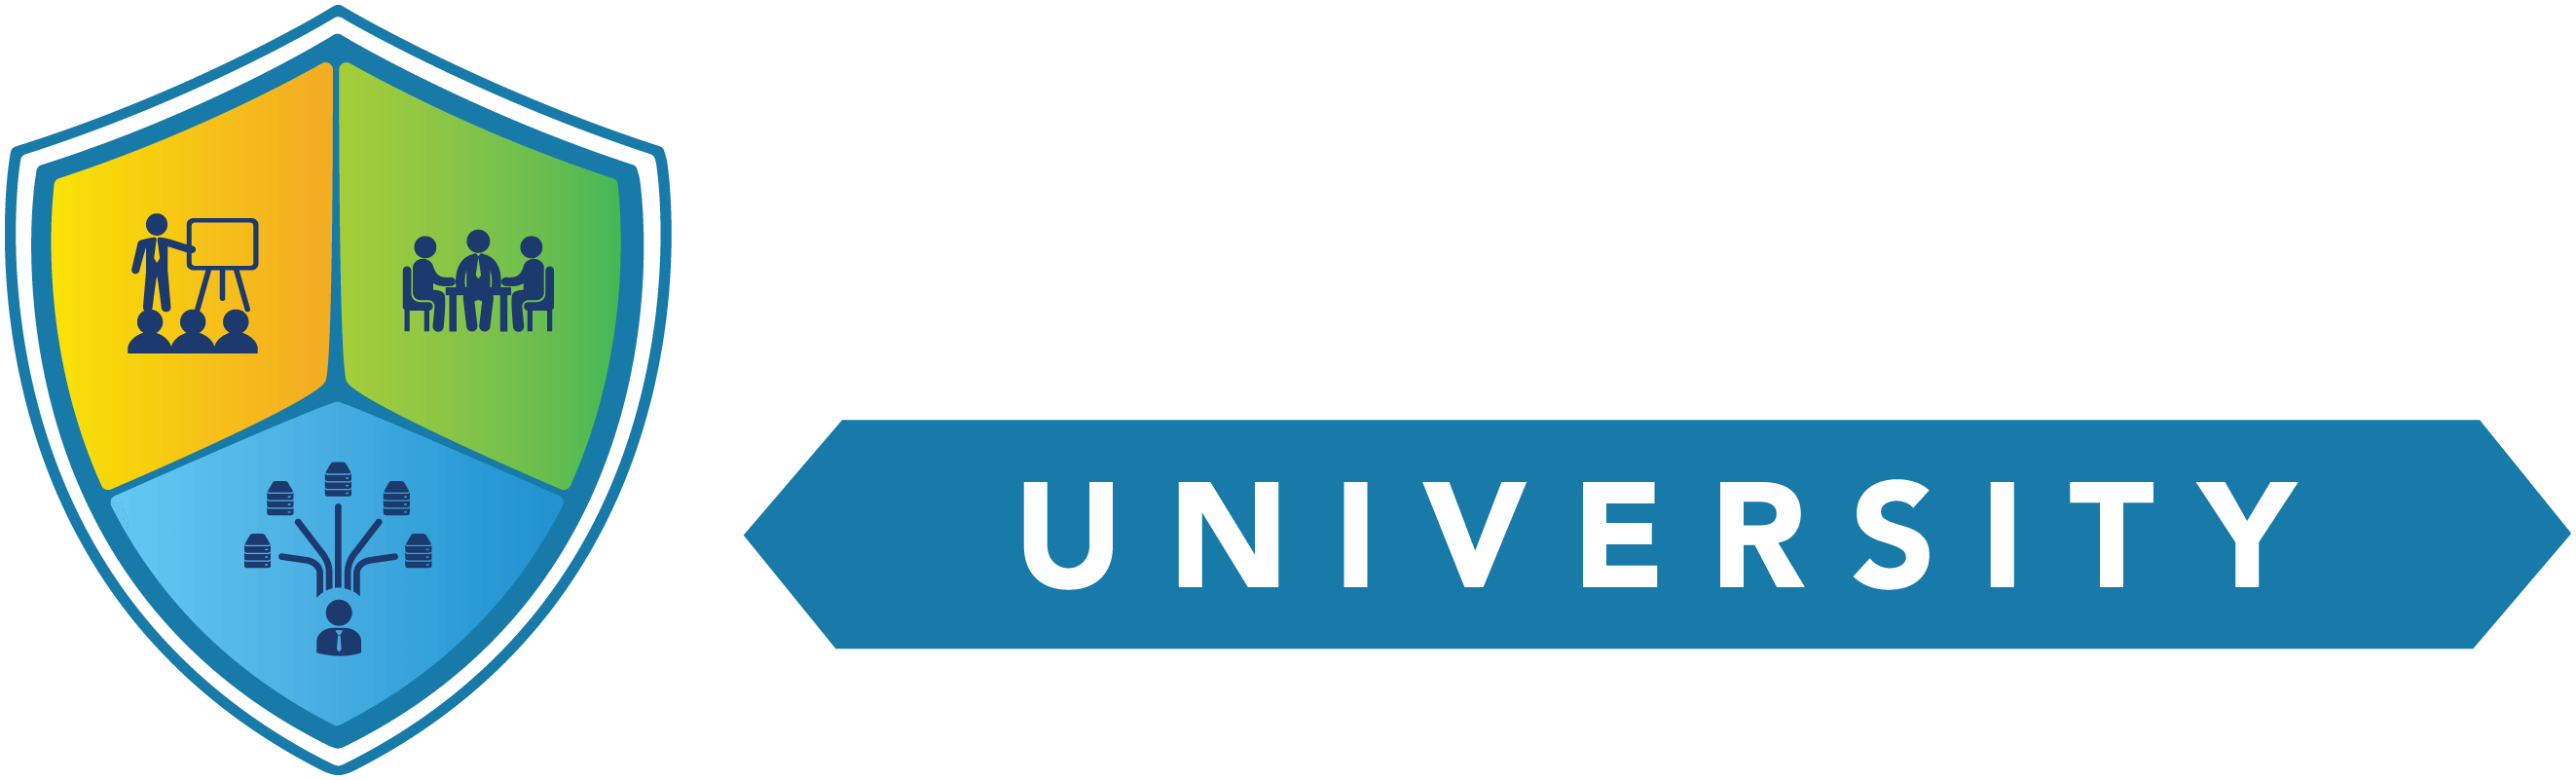 IEC 61850 University